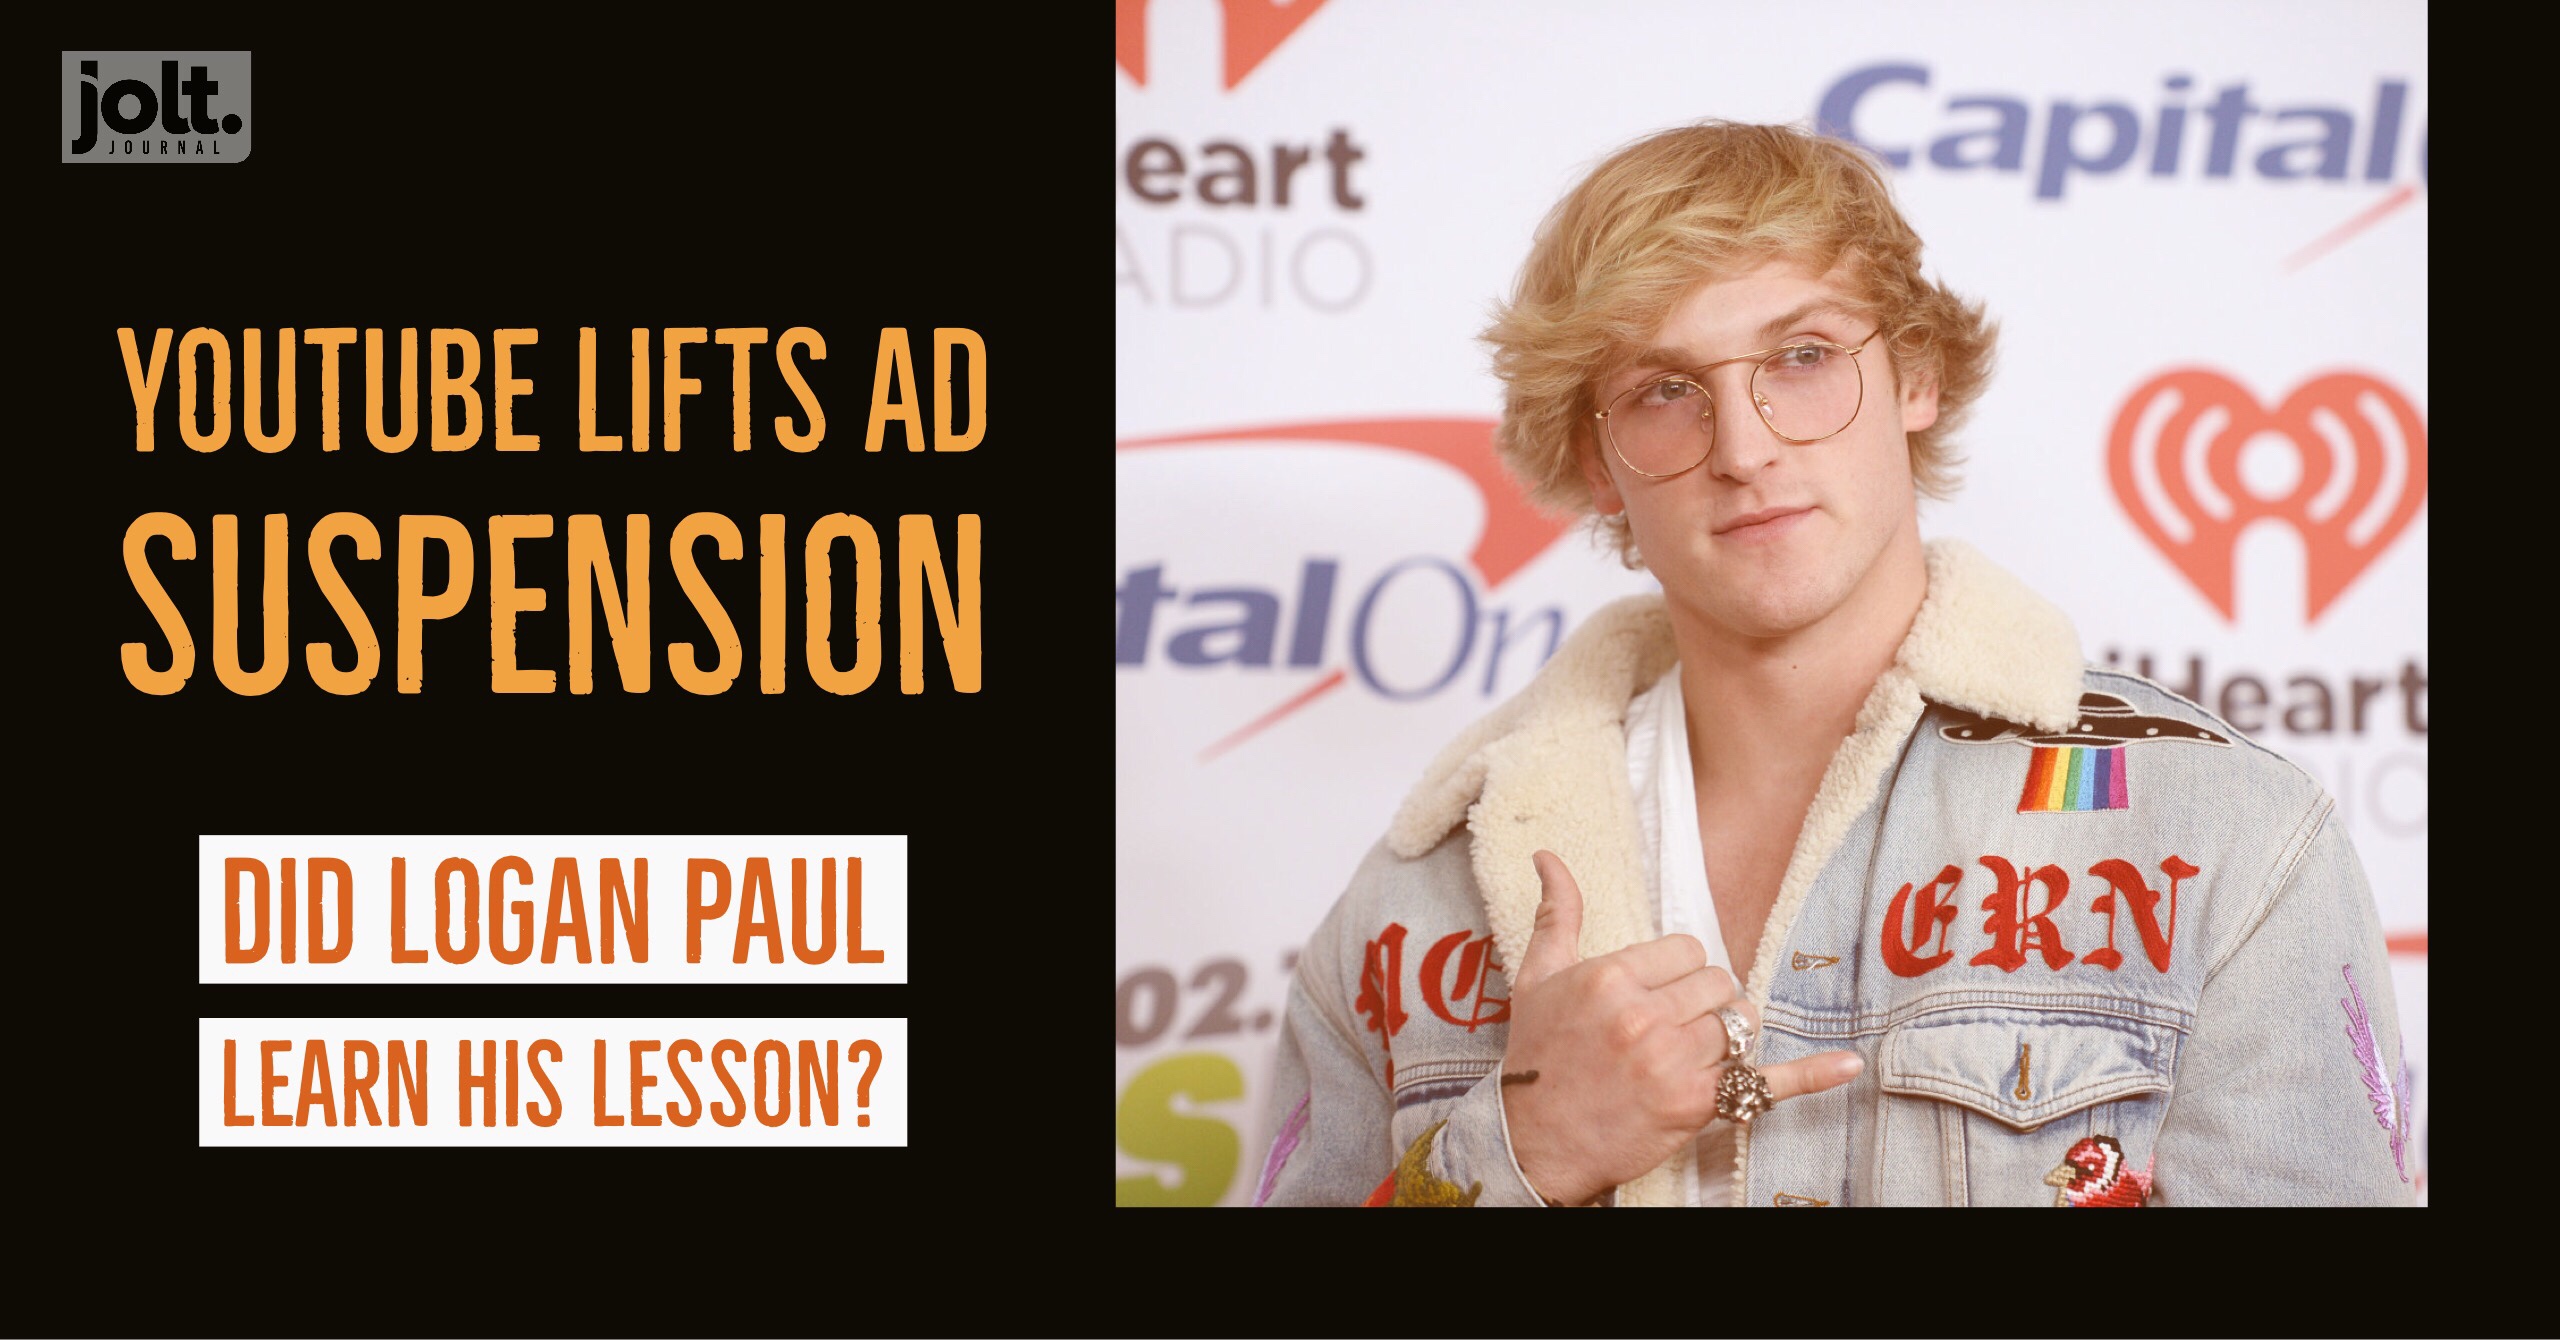 Following previous suspension, YouTube has restored Logan Paul’s ad revenue